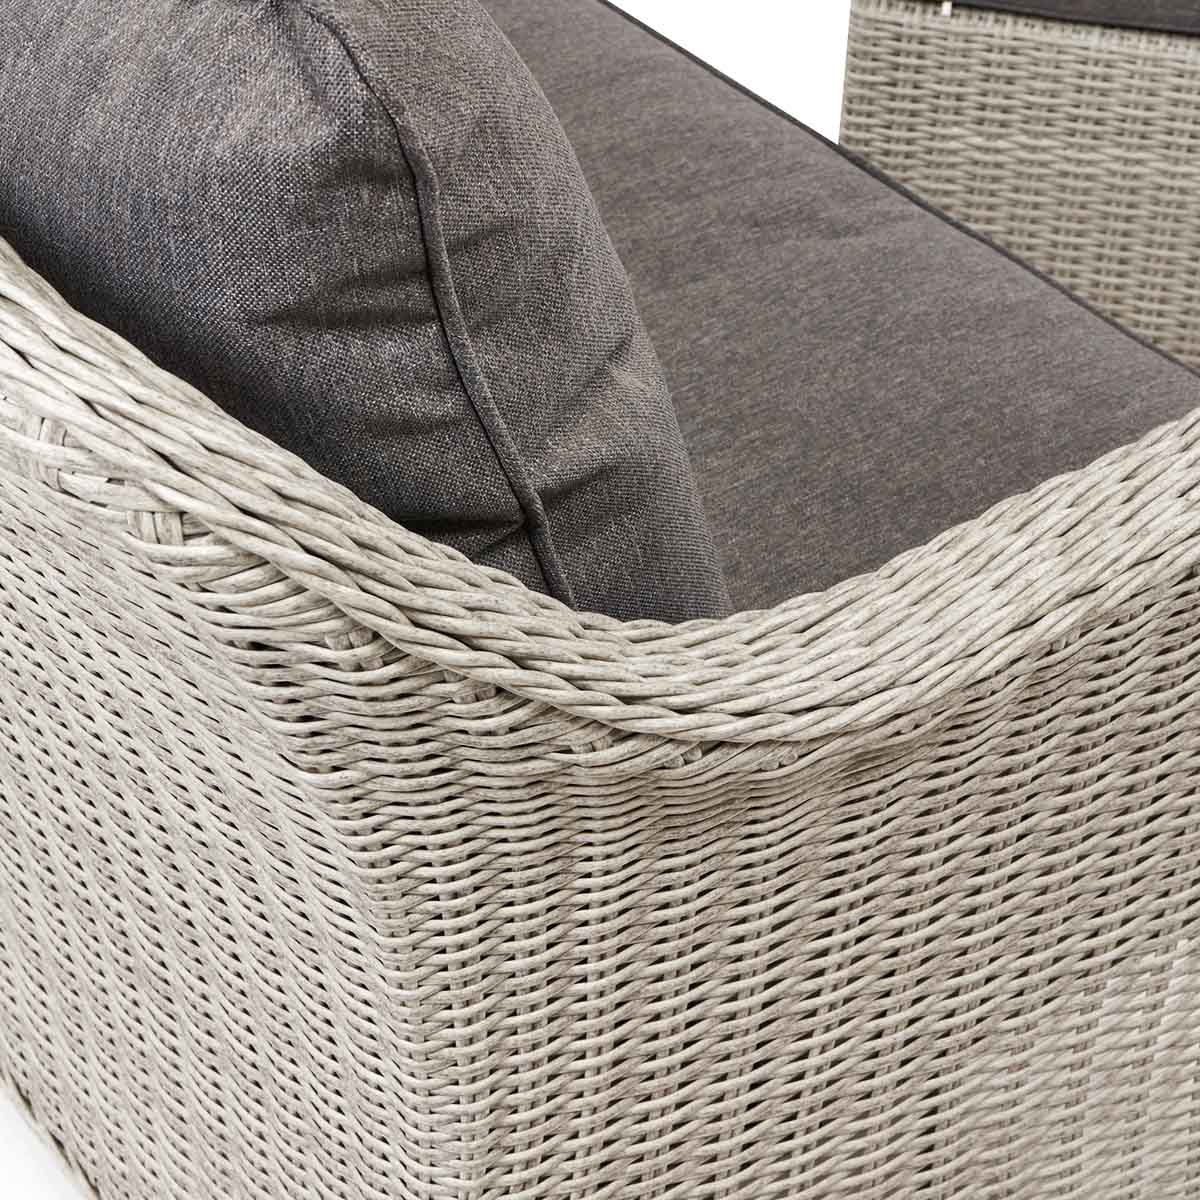 Sumatra Grey Rattan Effect Garden Corner Sofa Set with Fire Pit Ceramic Top Table – Click Style